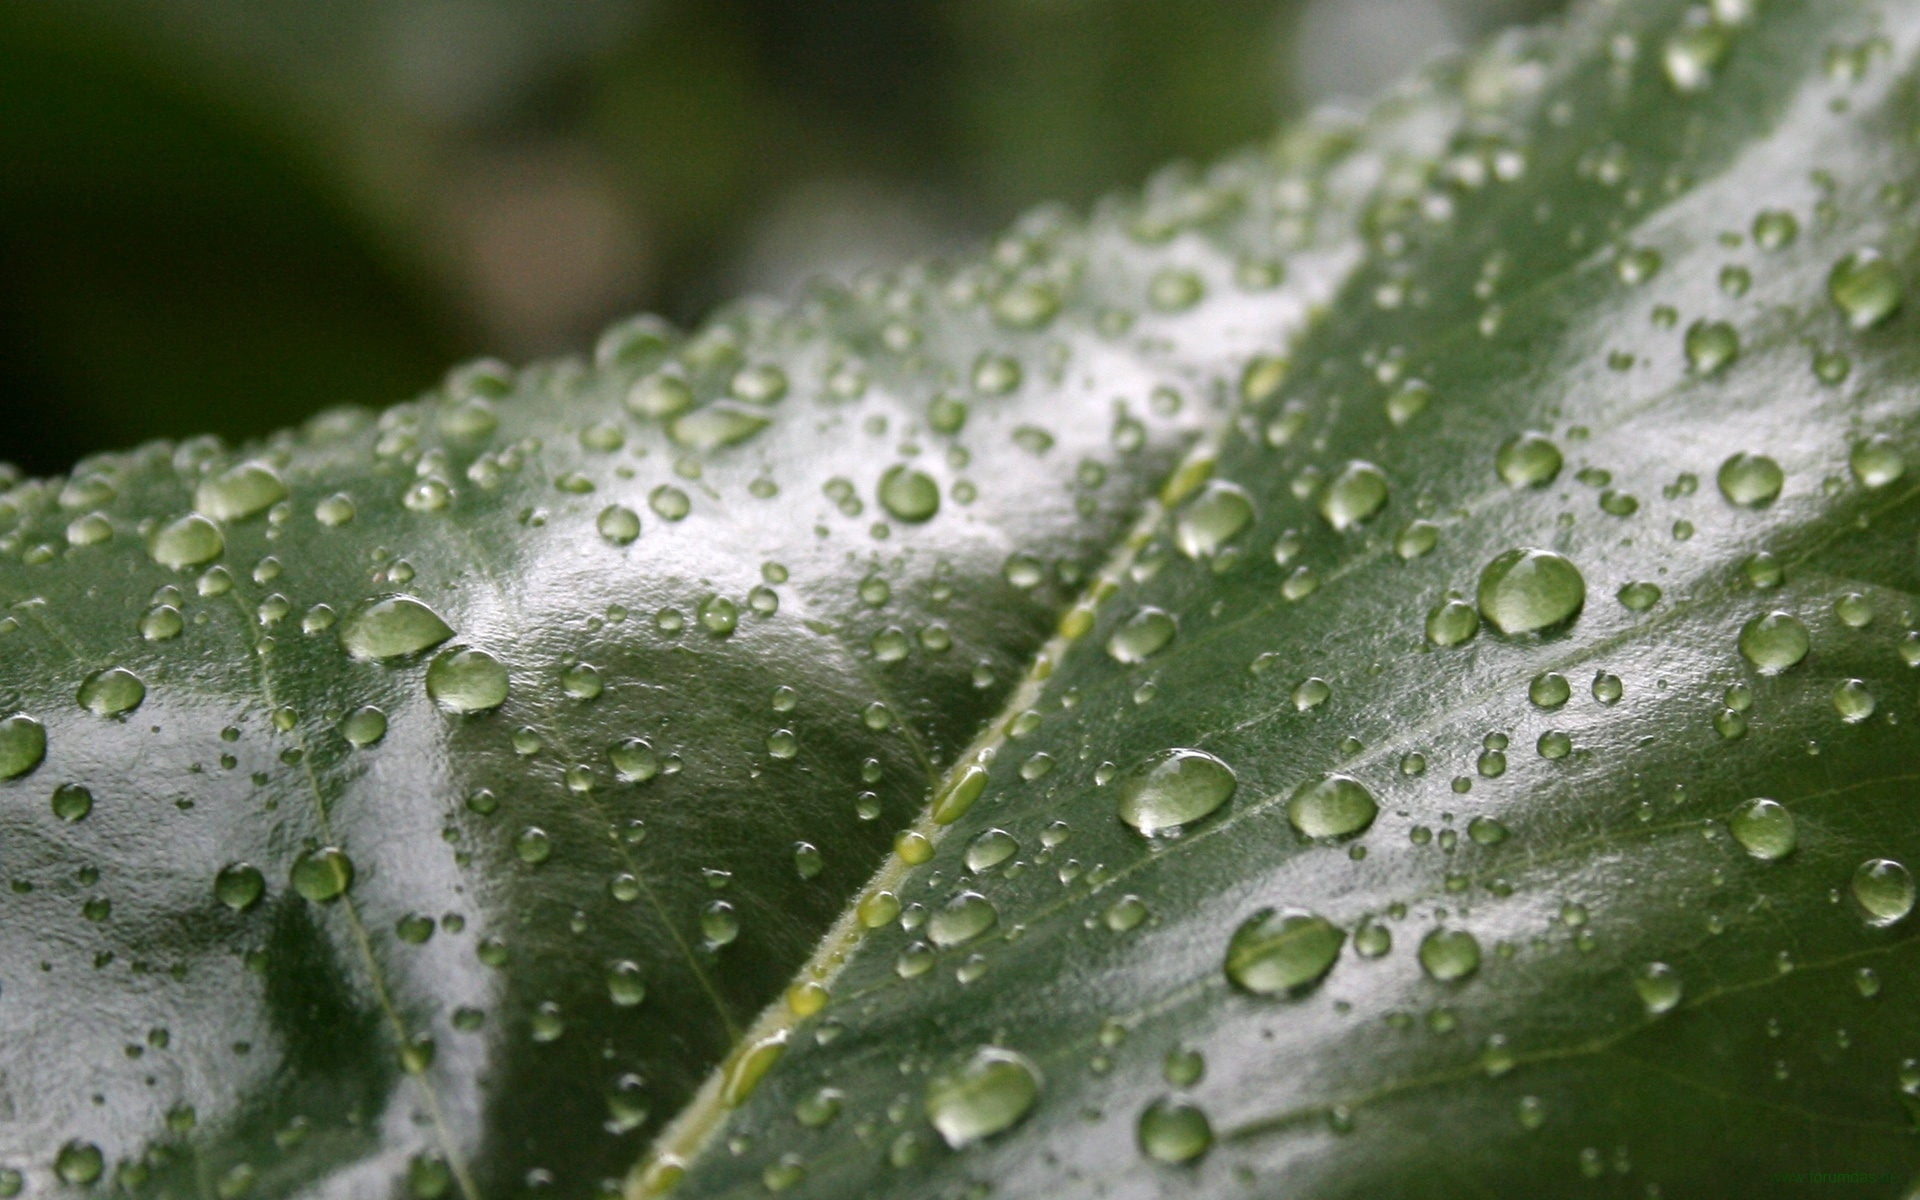 green leaf, drop, dew, moisture, nature, plant, green Color, wet